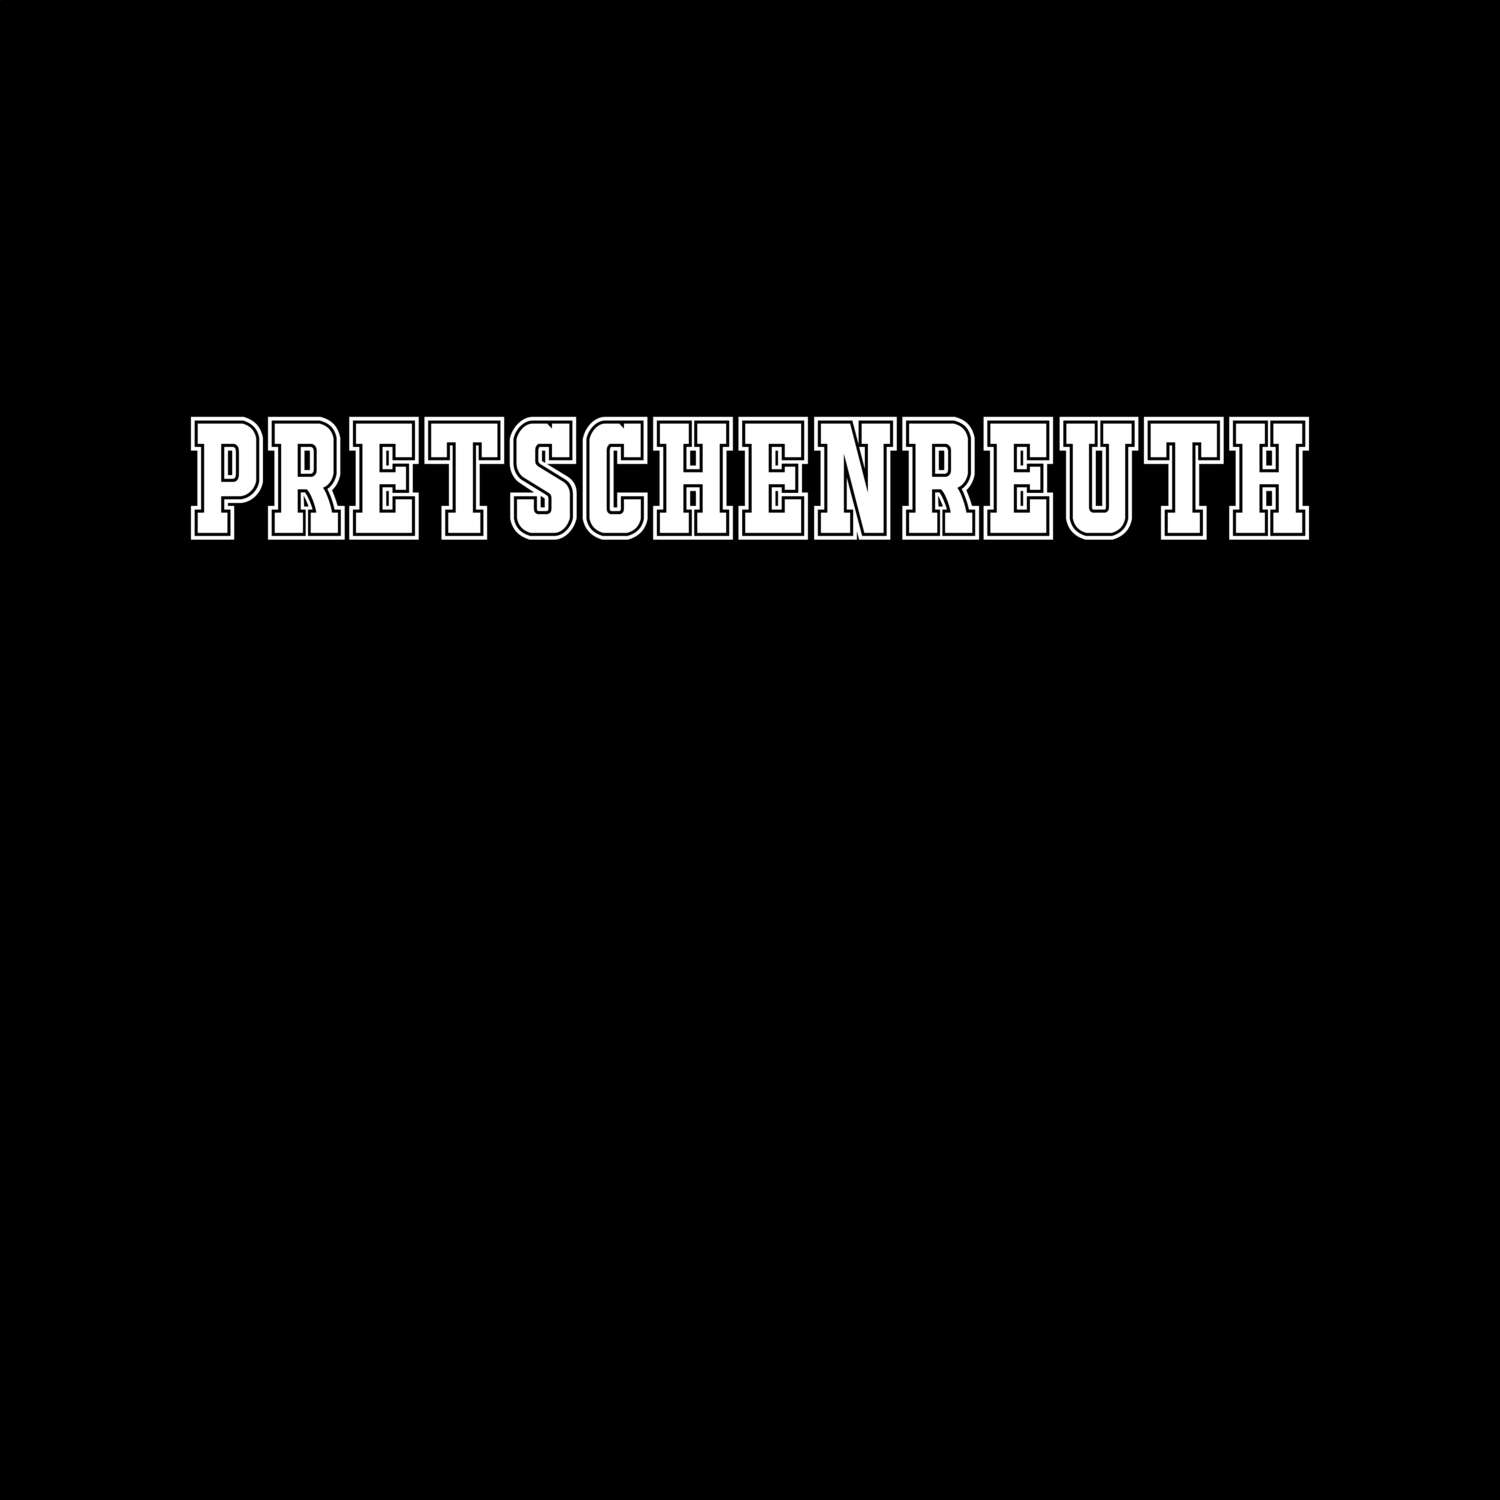 Pretschenreuth T-Shirt »Classic«